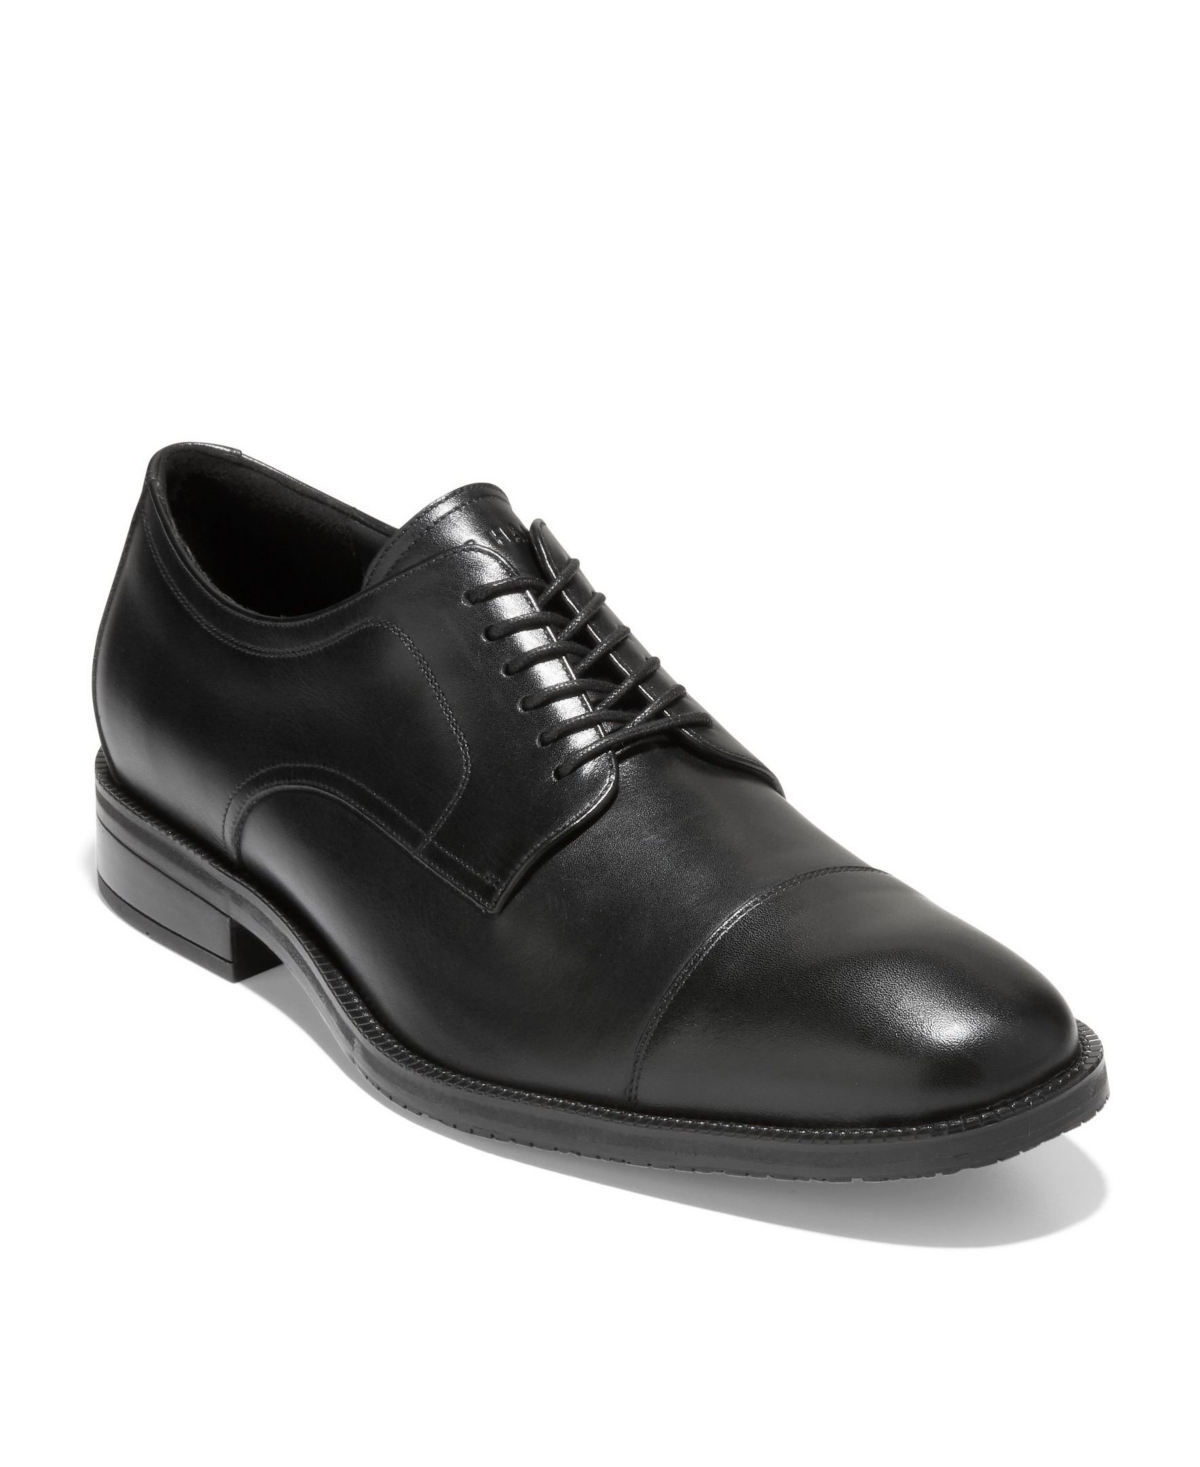 Men's Modern Essentials Cap Oxford Shoes - British Tan